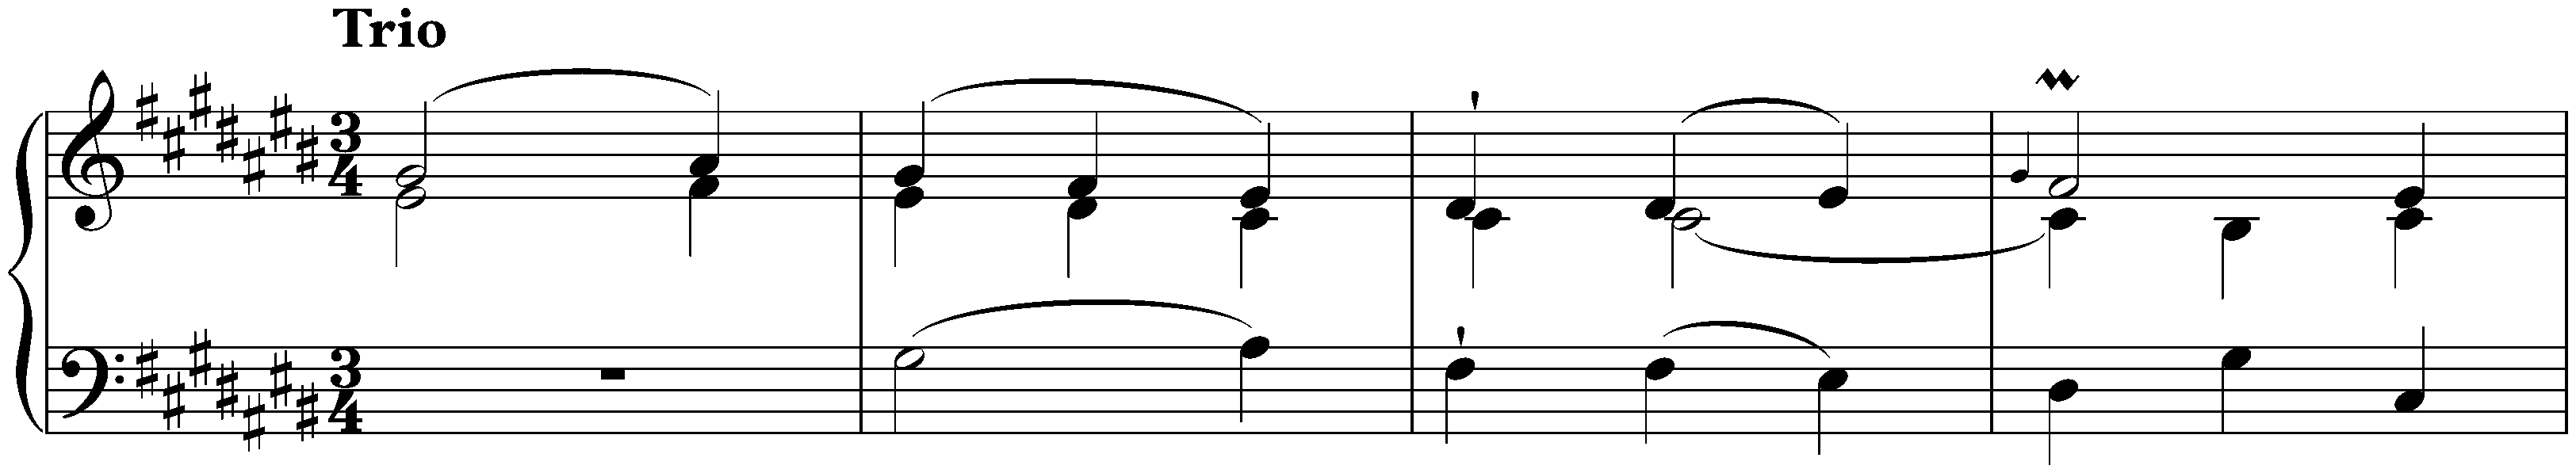 Sonata in C-sharp minor, Hob. XVI:36; 3. Menuet – Trio